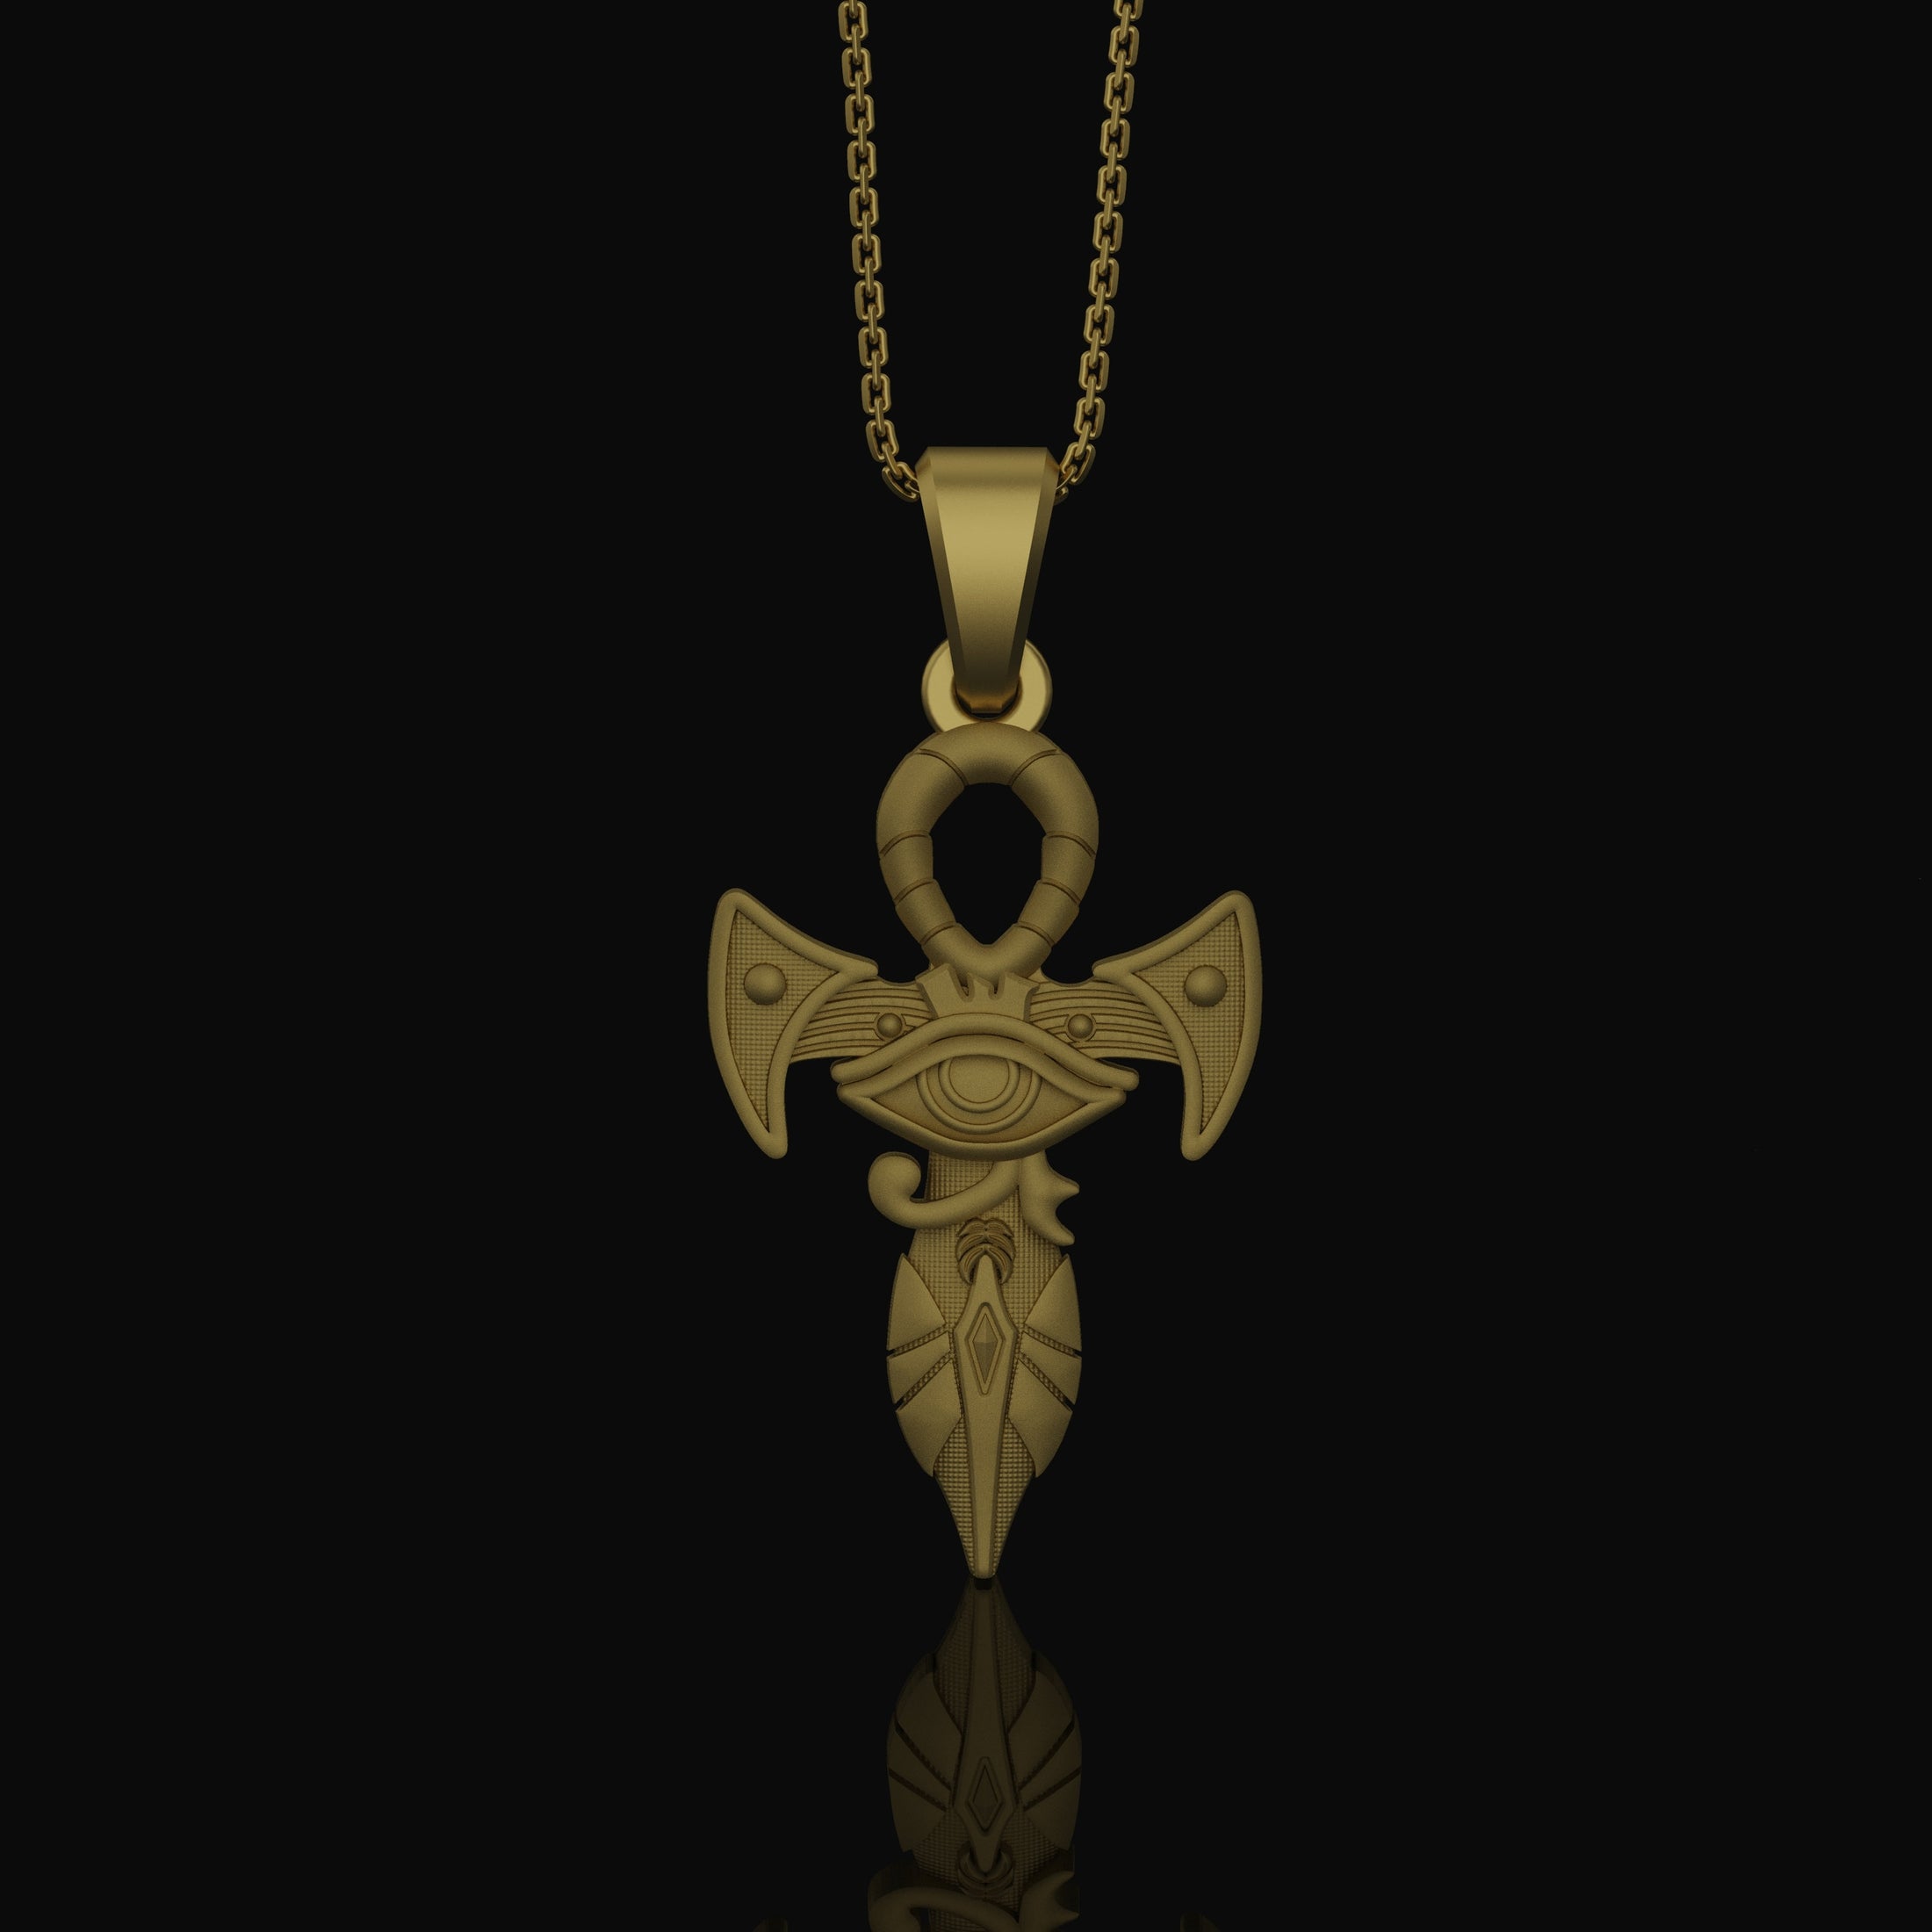 Silver Ankh Pendant - Key of Life Necklace, Egyptian Ankh Jewelry, Spiritual Symbol Charm, Gift Idea